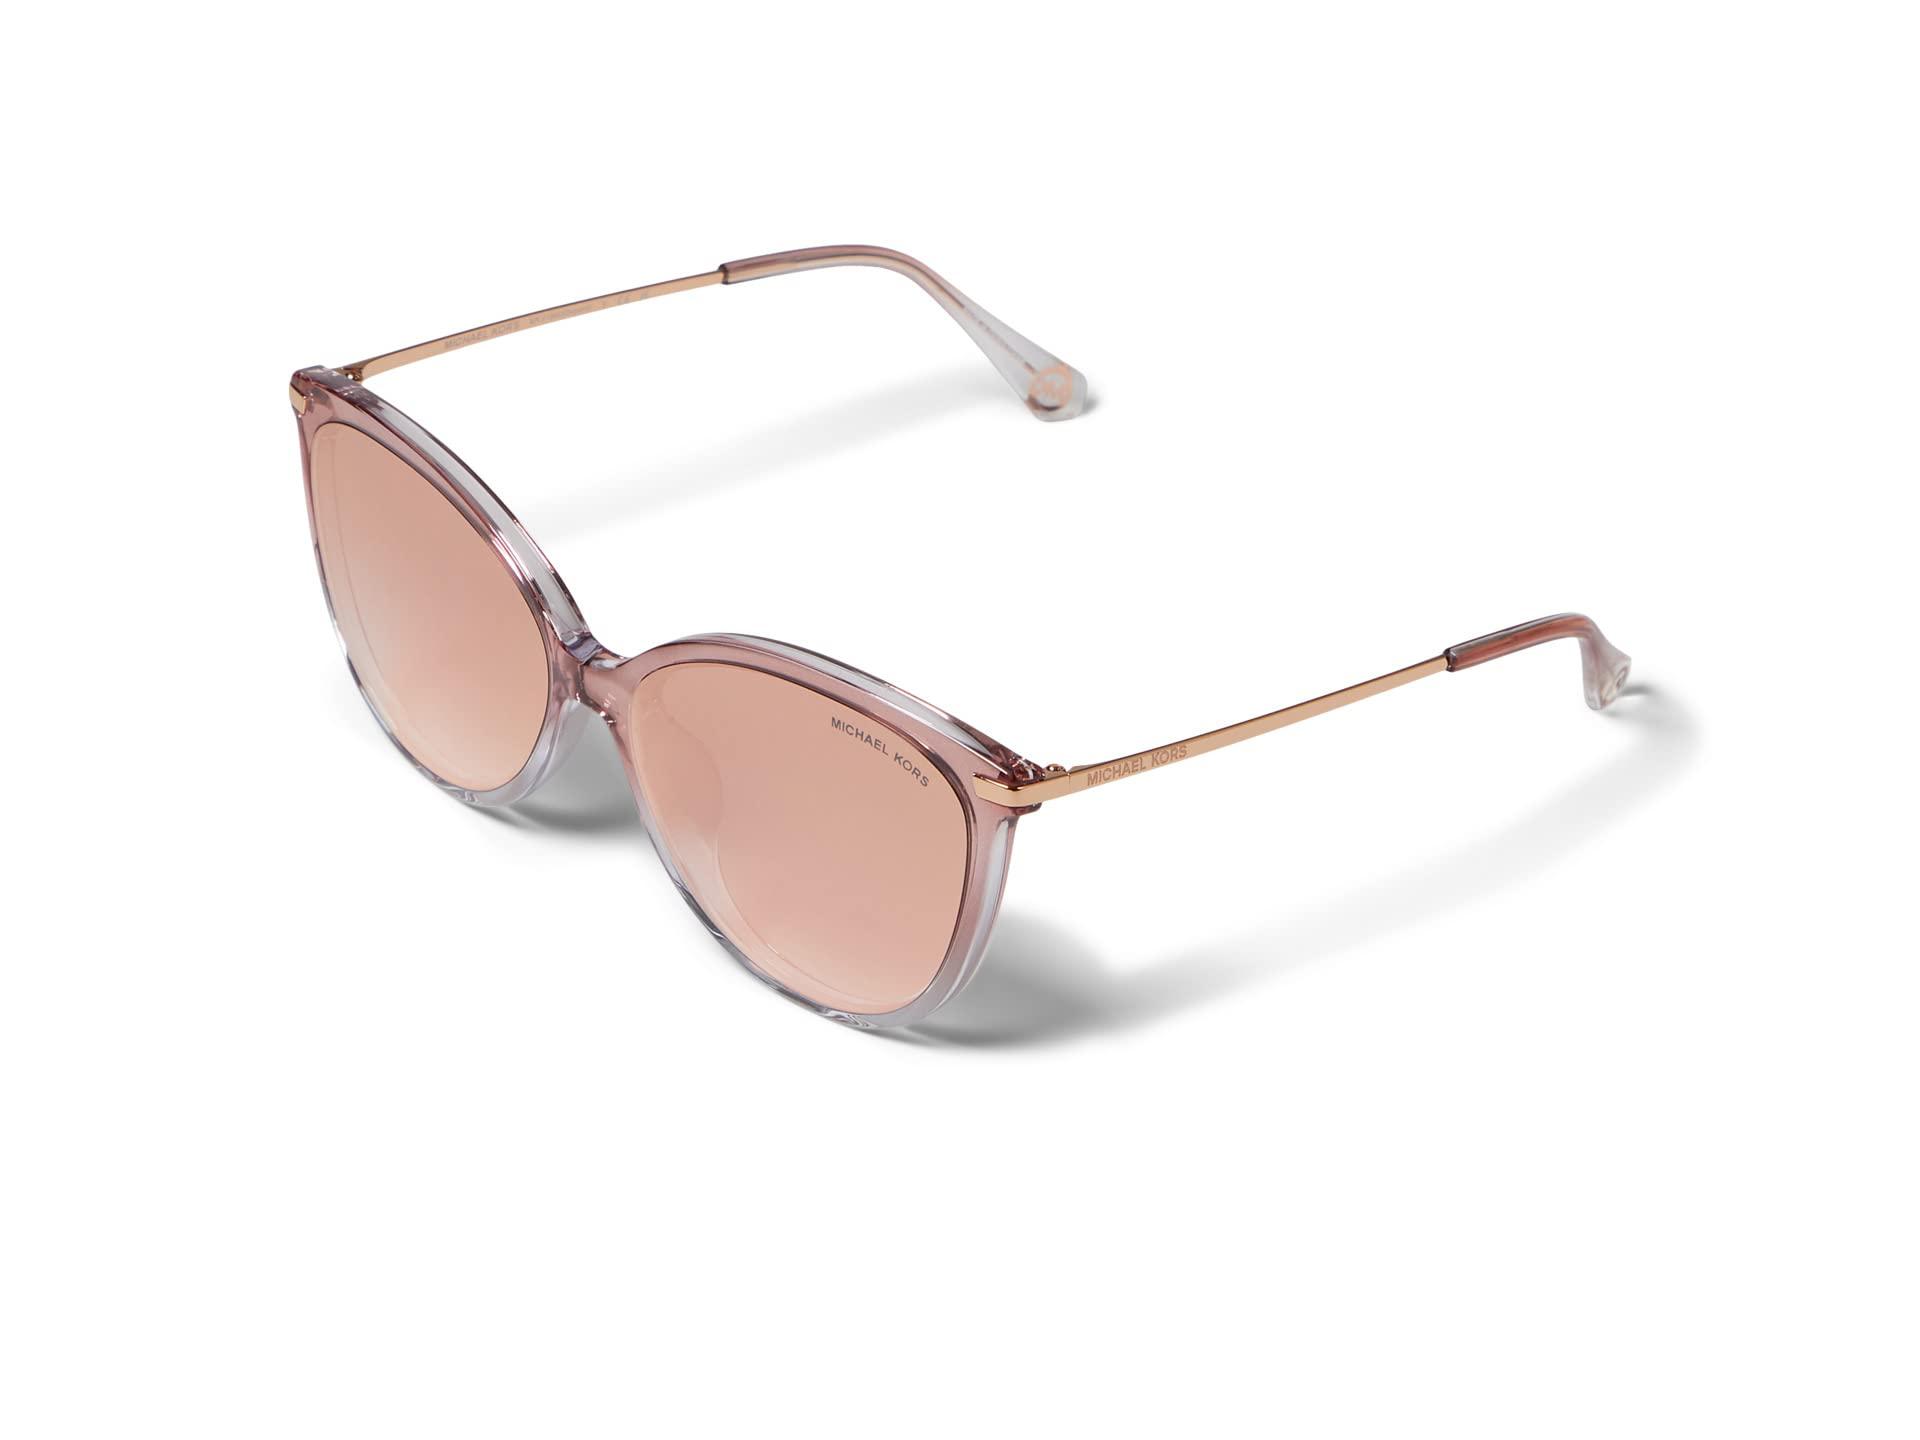 15 Pairs of Chic Sunglasses Under $100 - Washingtonian